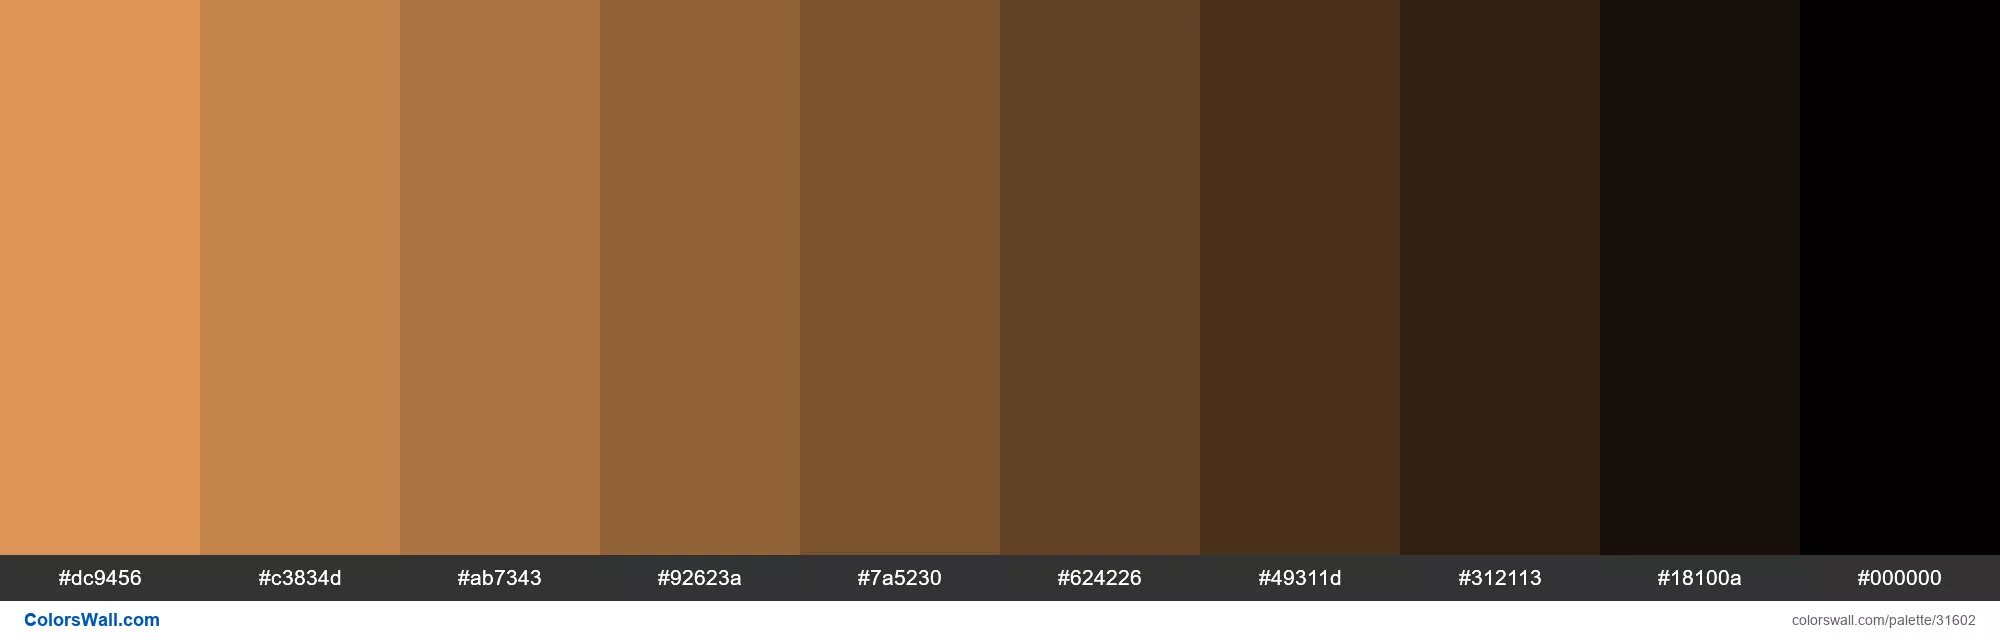 #2f2c27 пантон. RGB палитра коричневый. Коды коричневого цвета. Пантон коричневый цвет палитра.